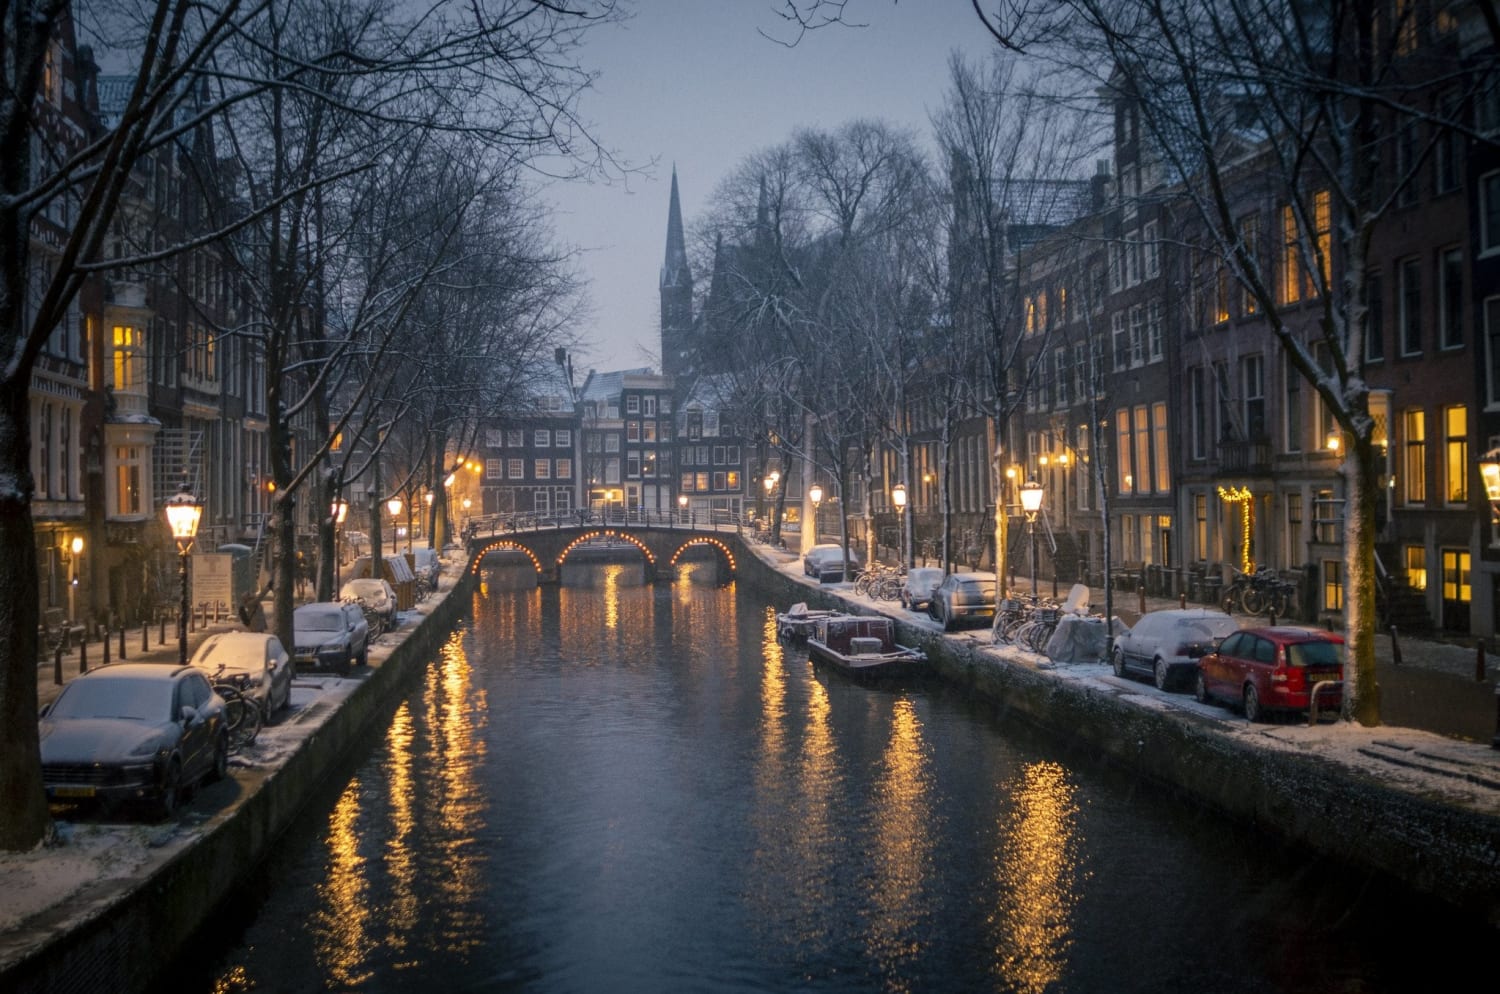 I took a photo in Amsterdam the last time it snowed... felt like walking around a fairytale.